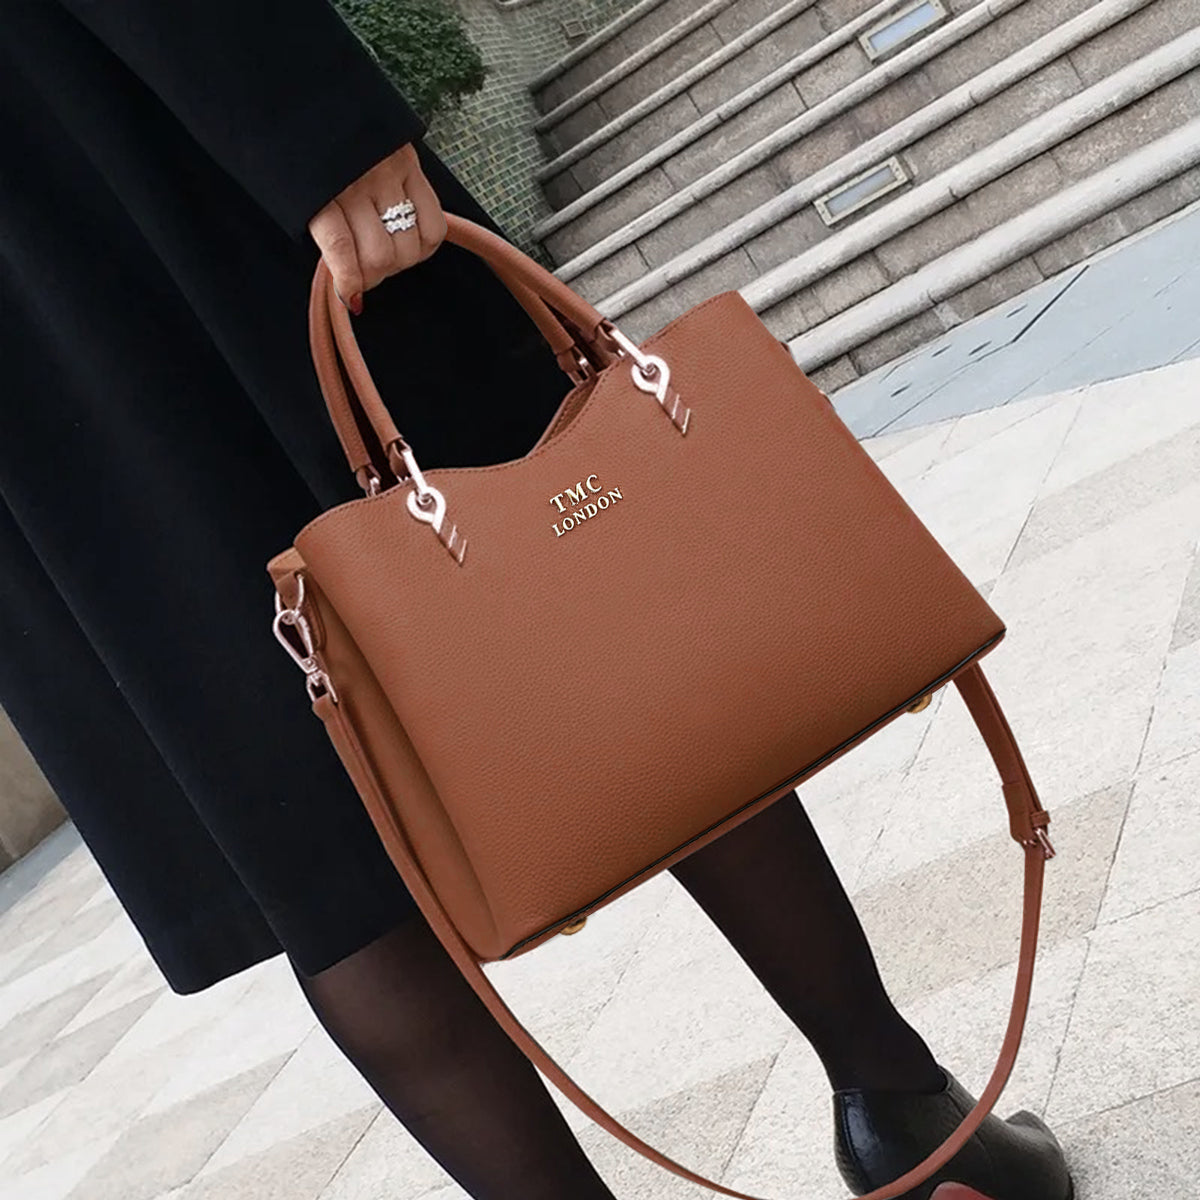 Tan top handle crossbody handbag